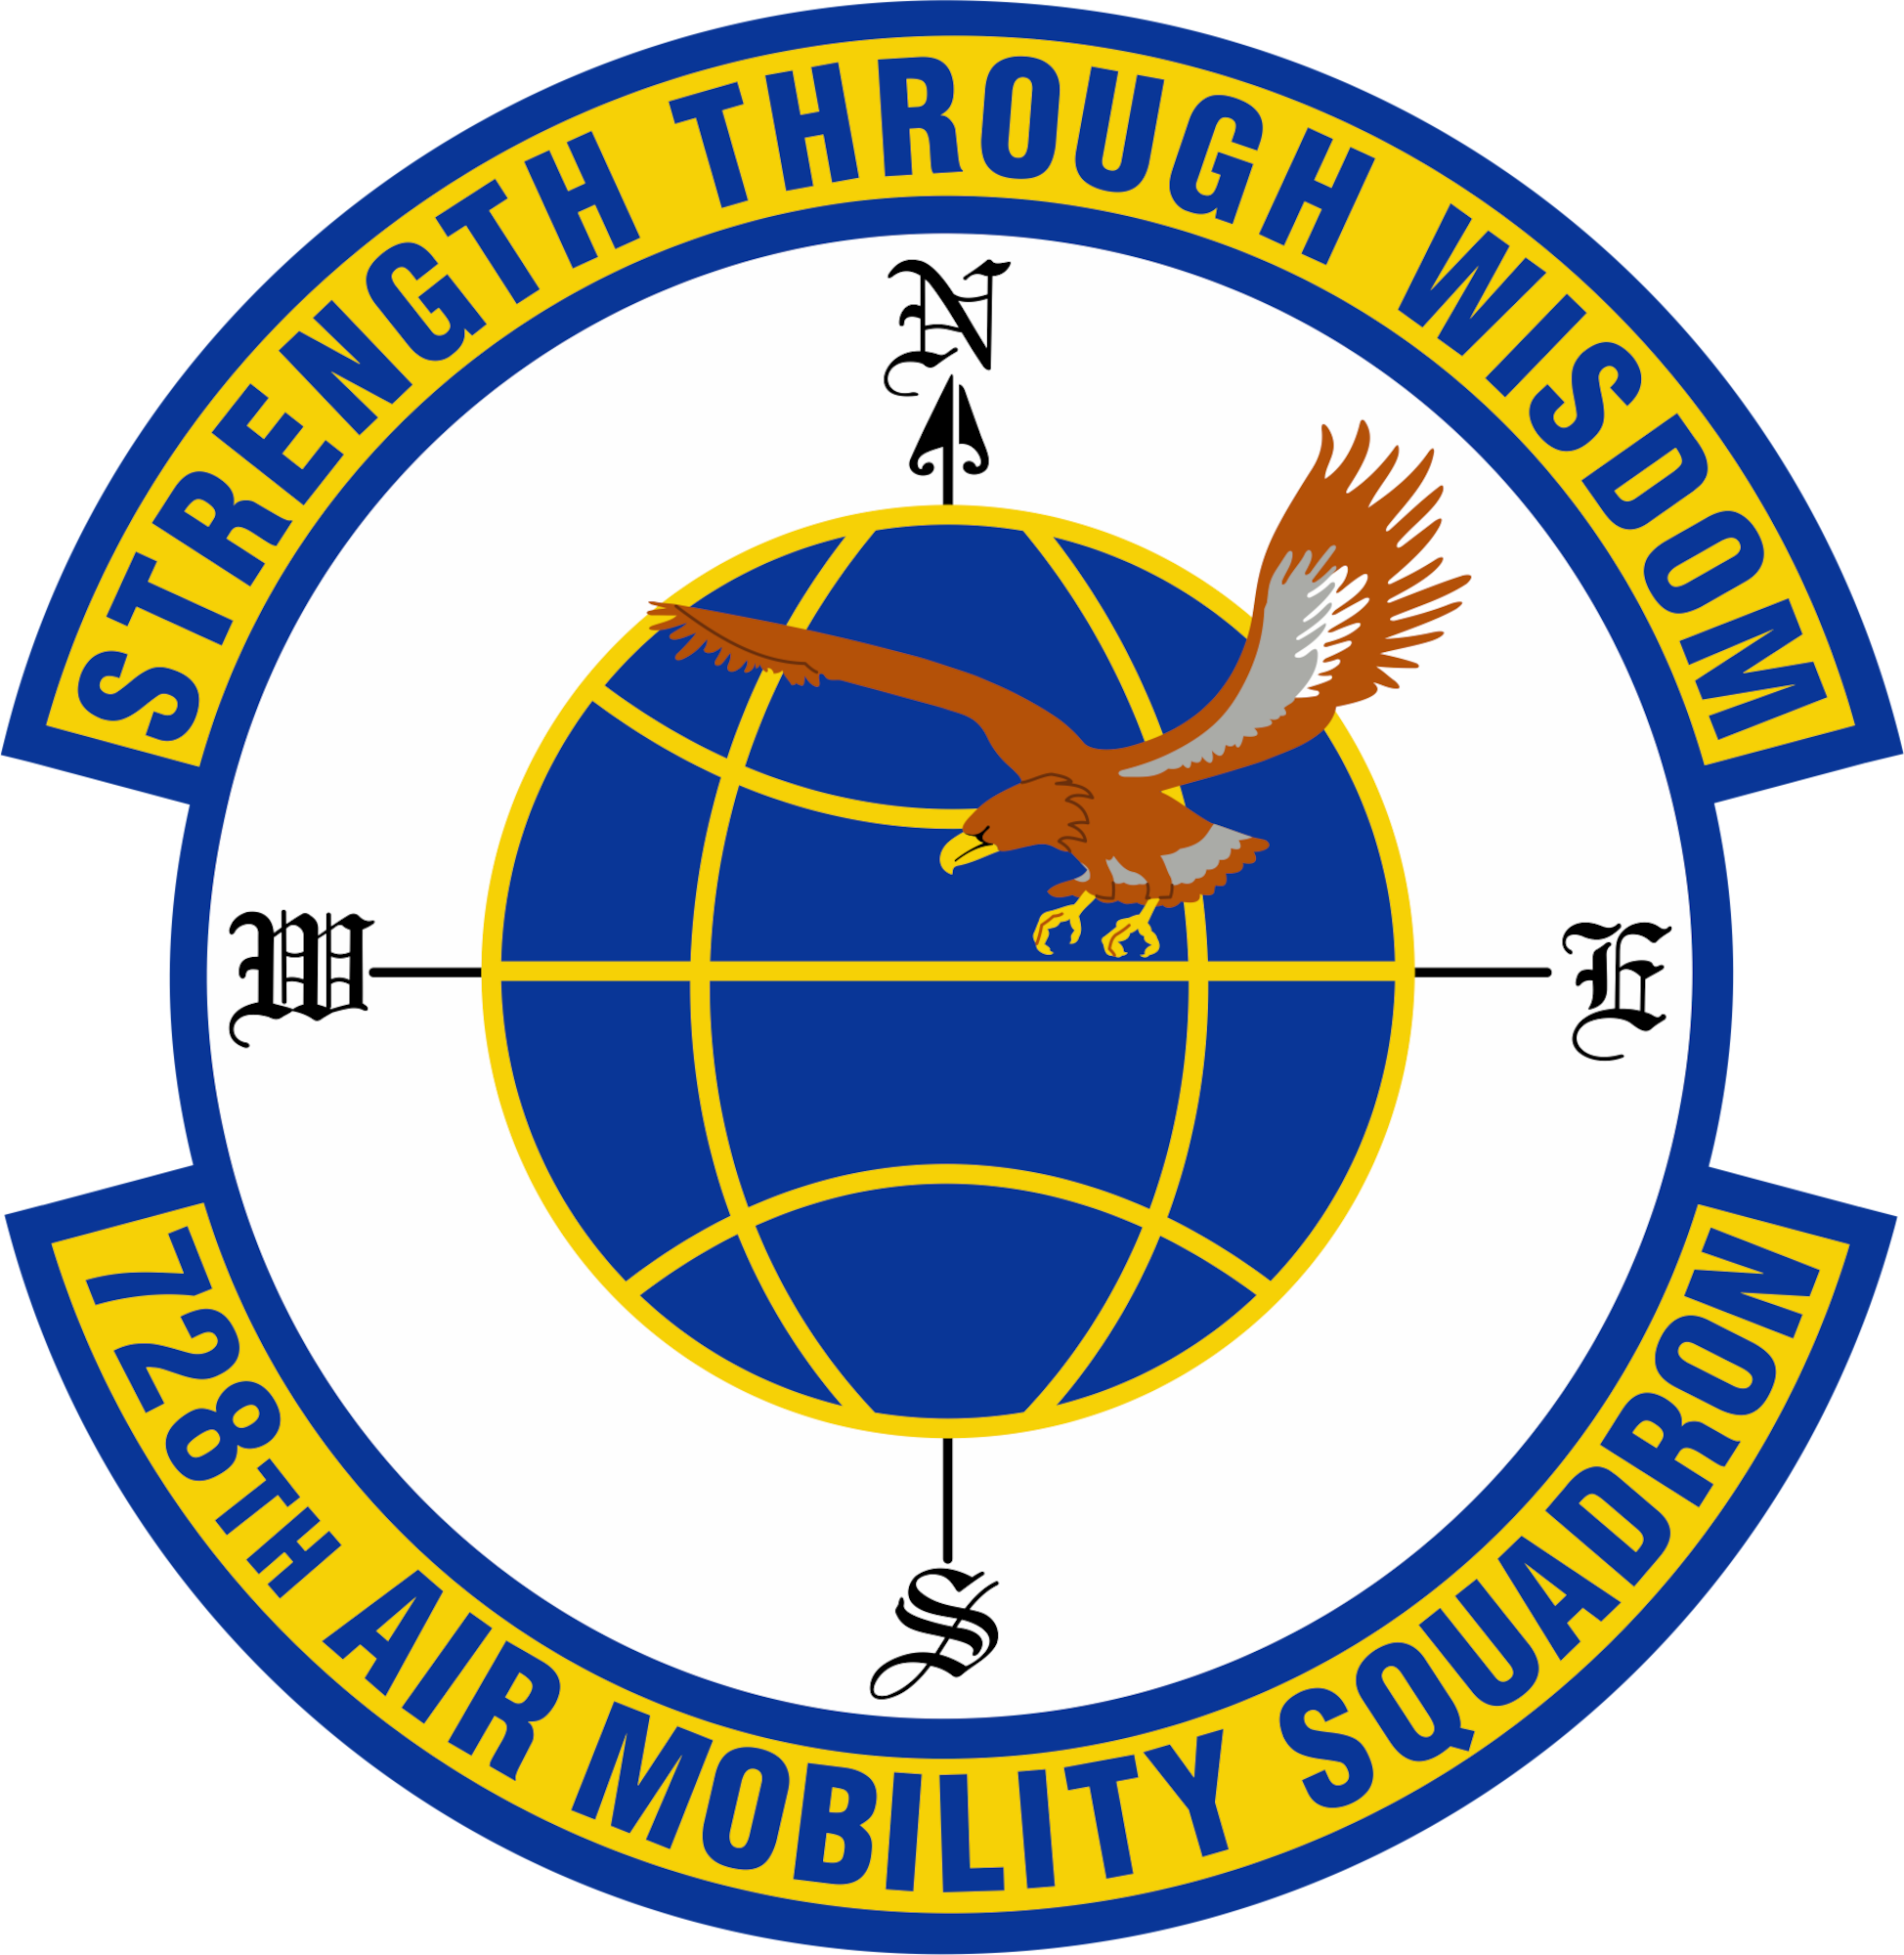 728th Air Mobility Squadron Shield